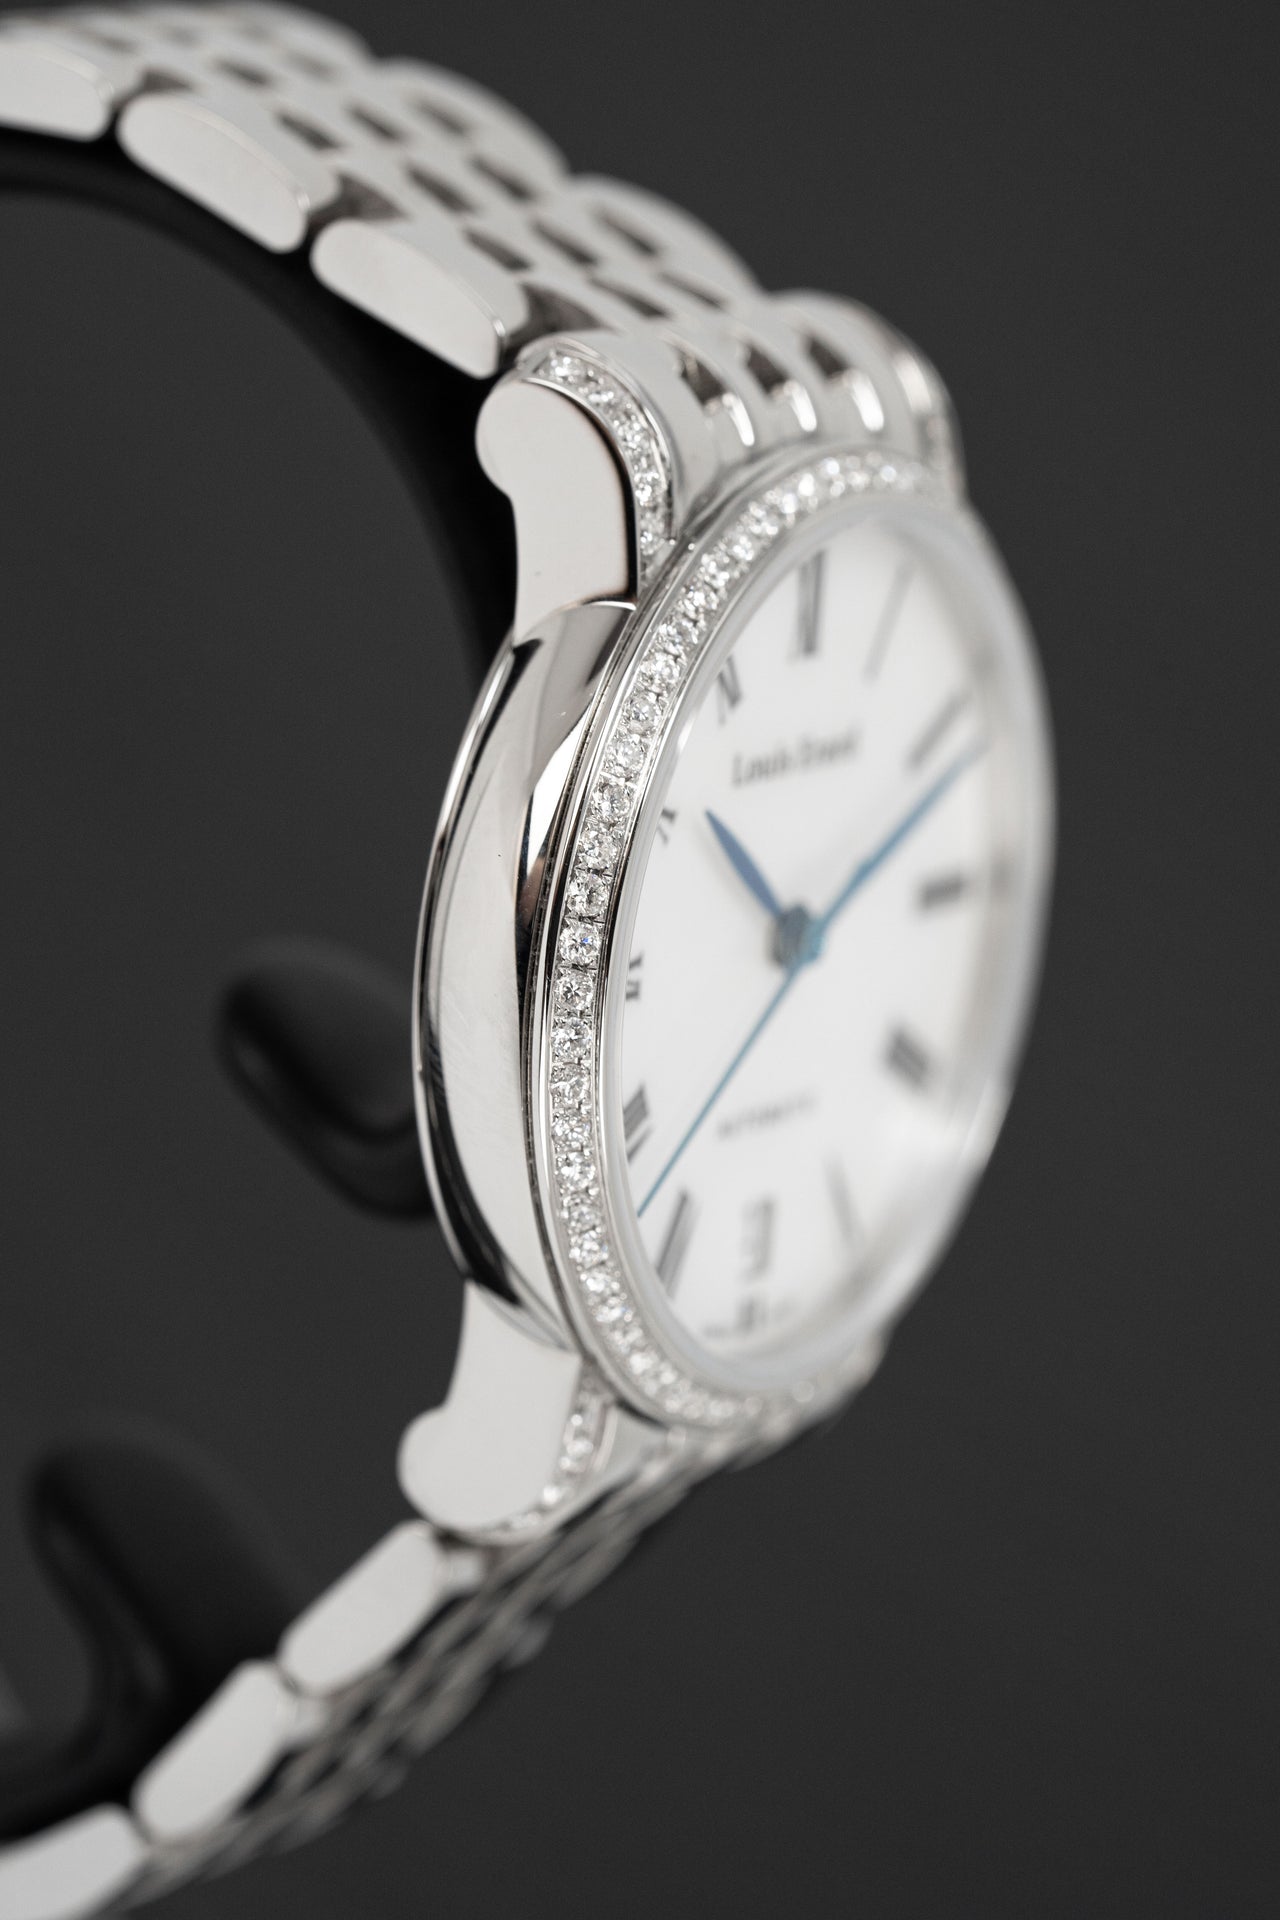 Louis Erard Heritage Automatic Diamond White Dial Ladies Watch  20100AB34BMA20 - Watches, Heritage - Jomashop